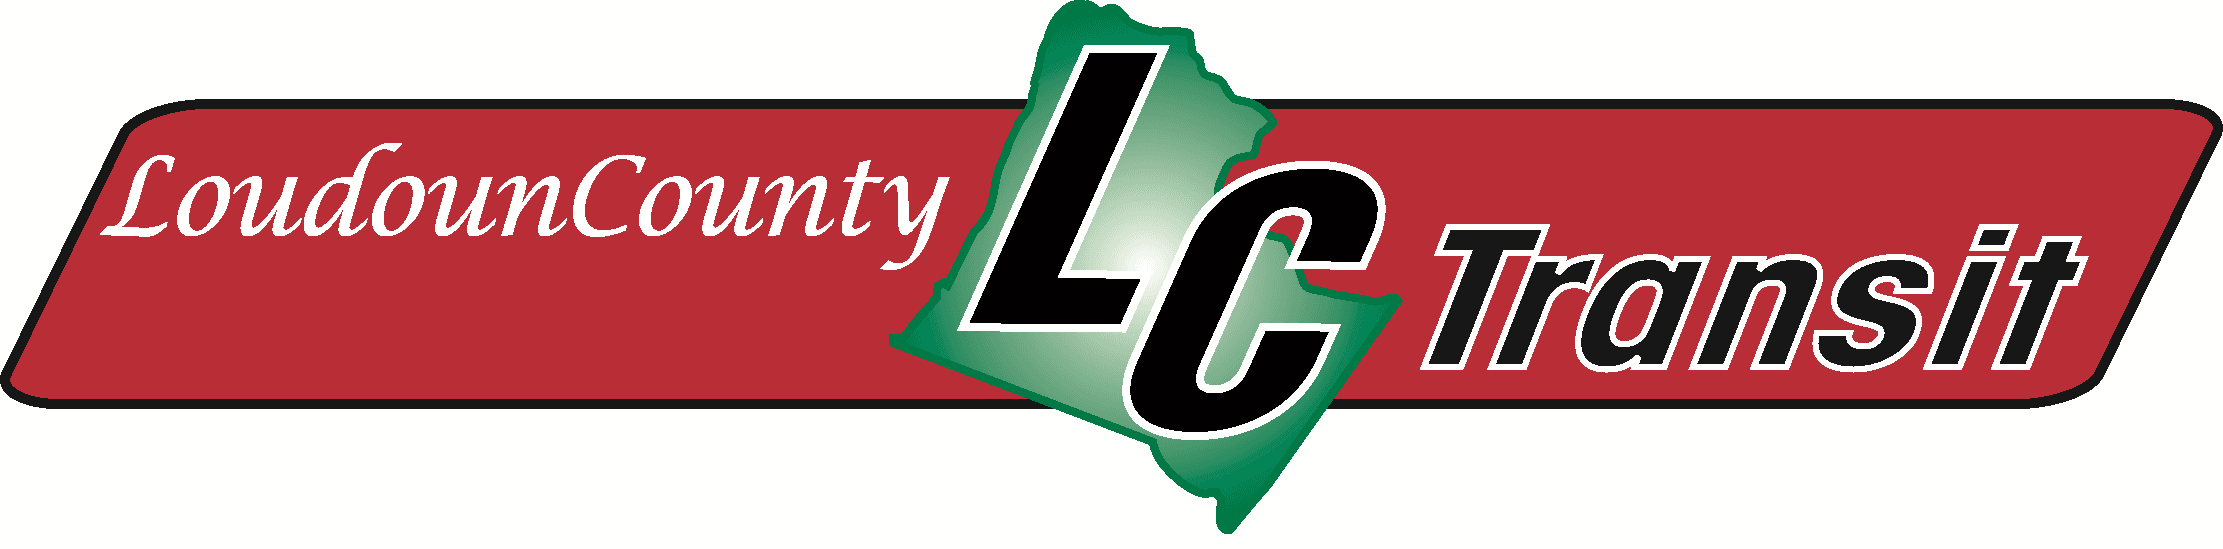 Loudoun Commuter Bus Service logo